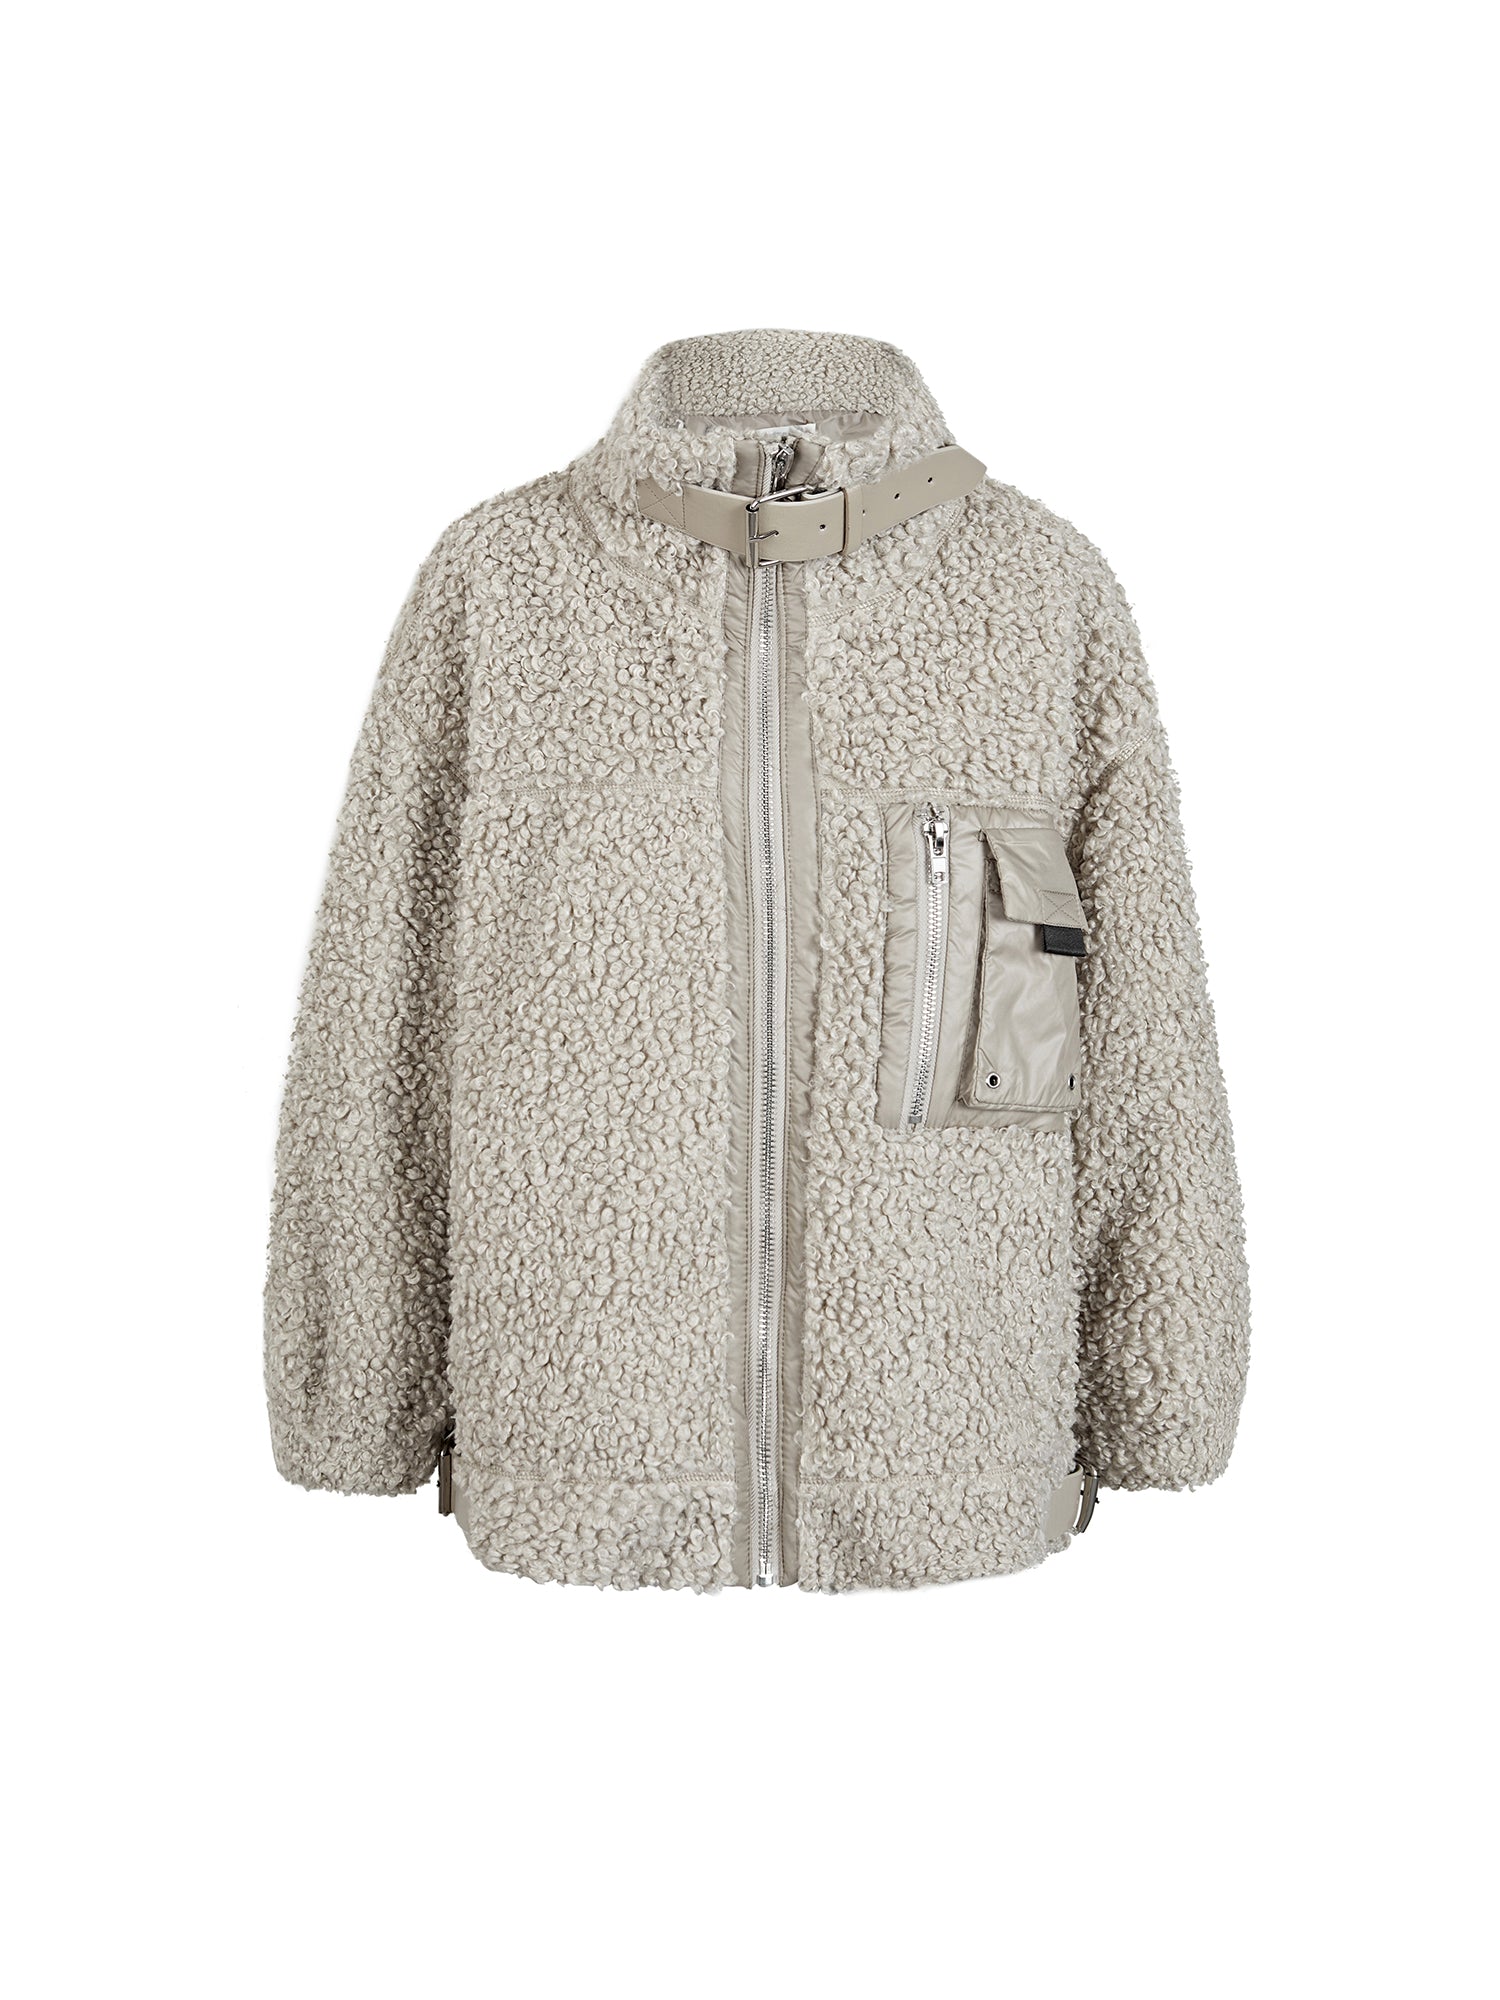 High Collar Stitching Pocket Faux Sherpa Wool Jacket